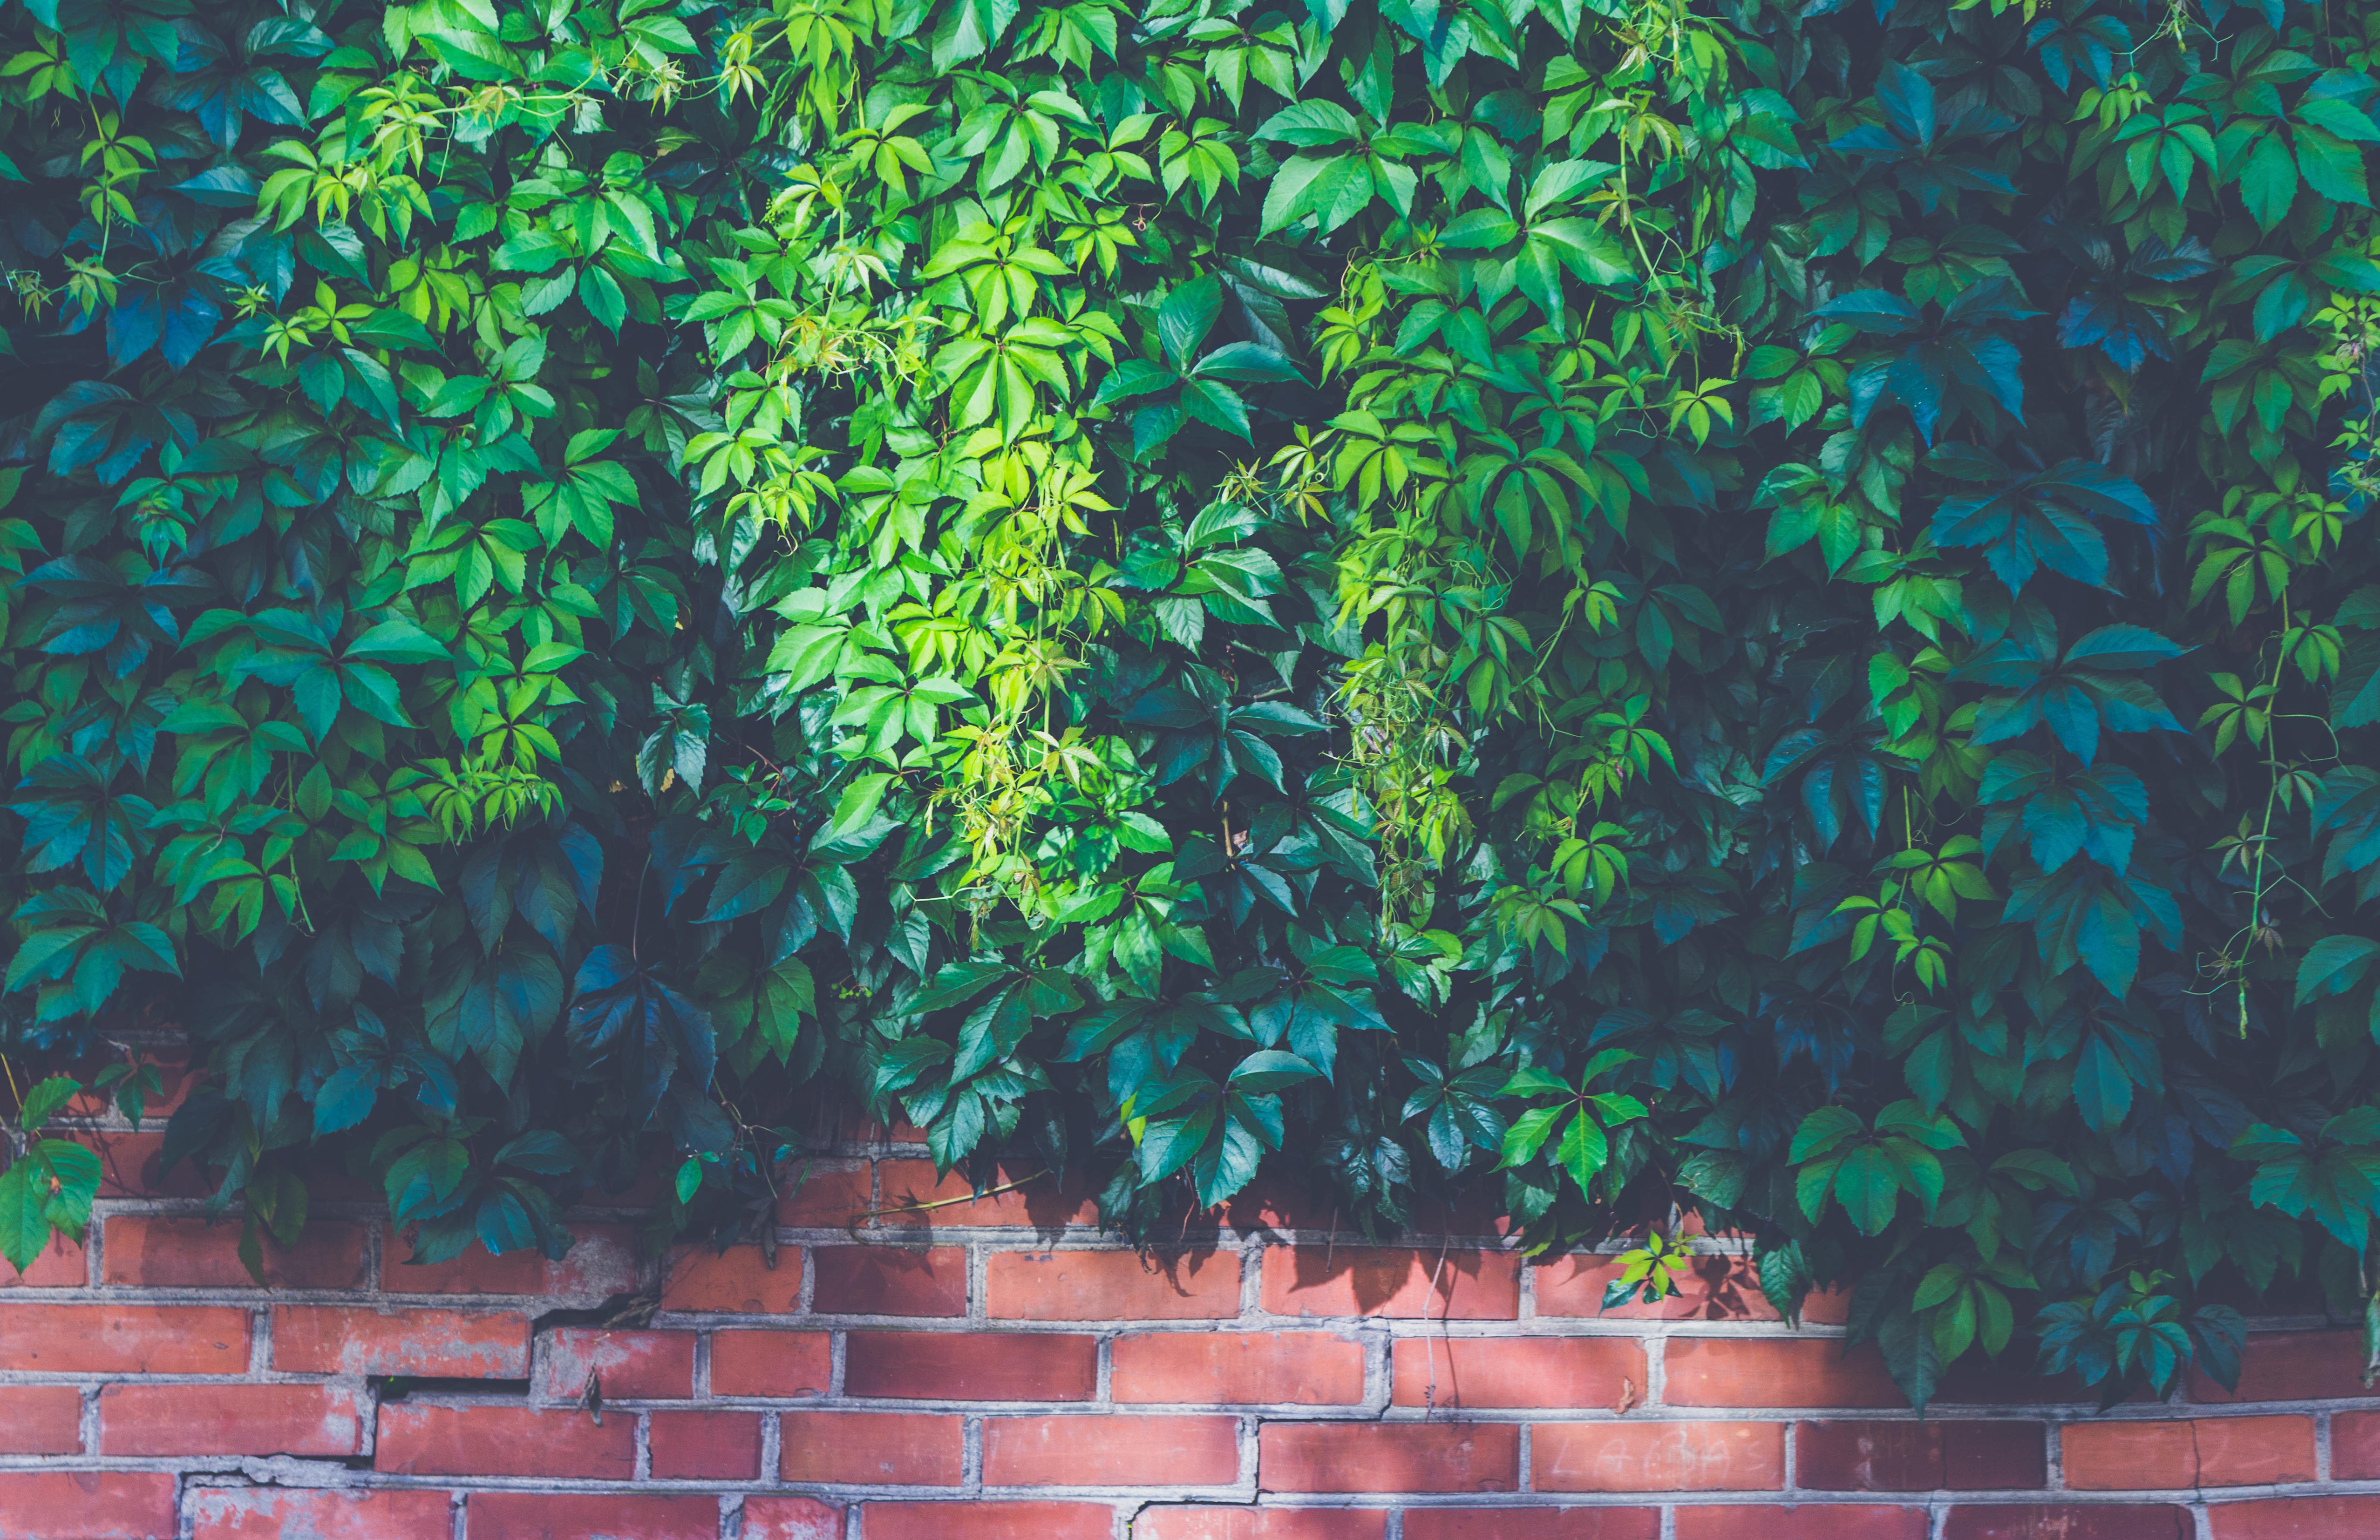 Brick wall with lush climbing vines